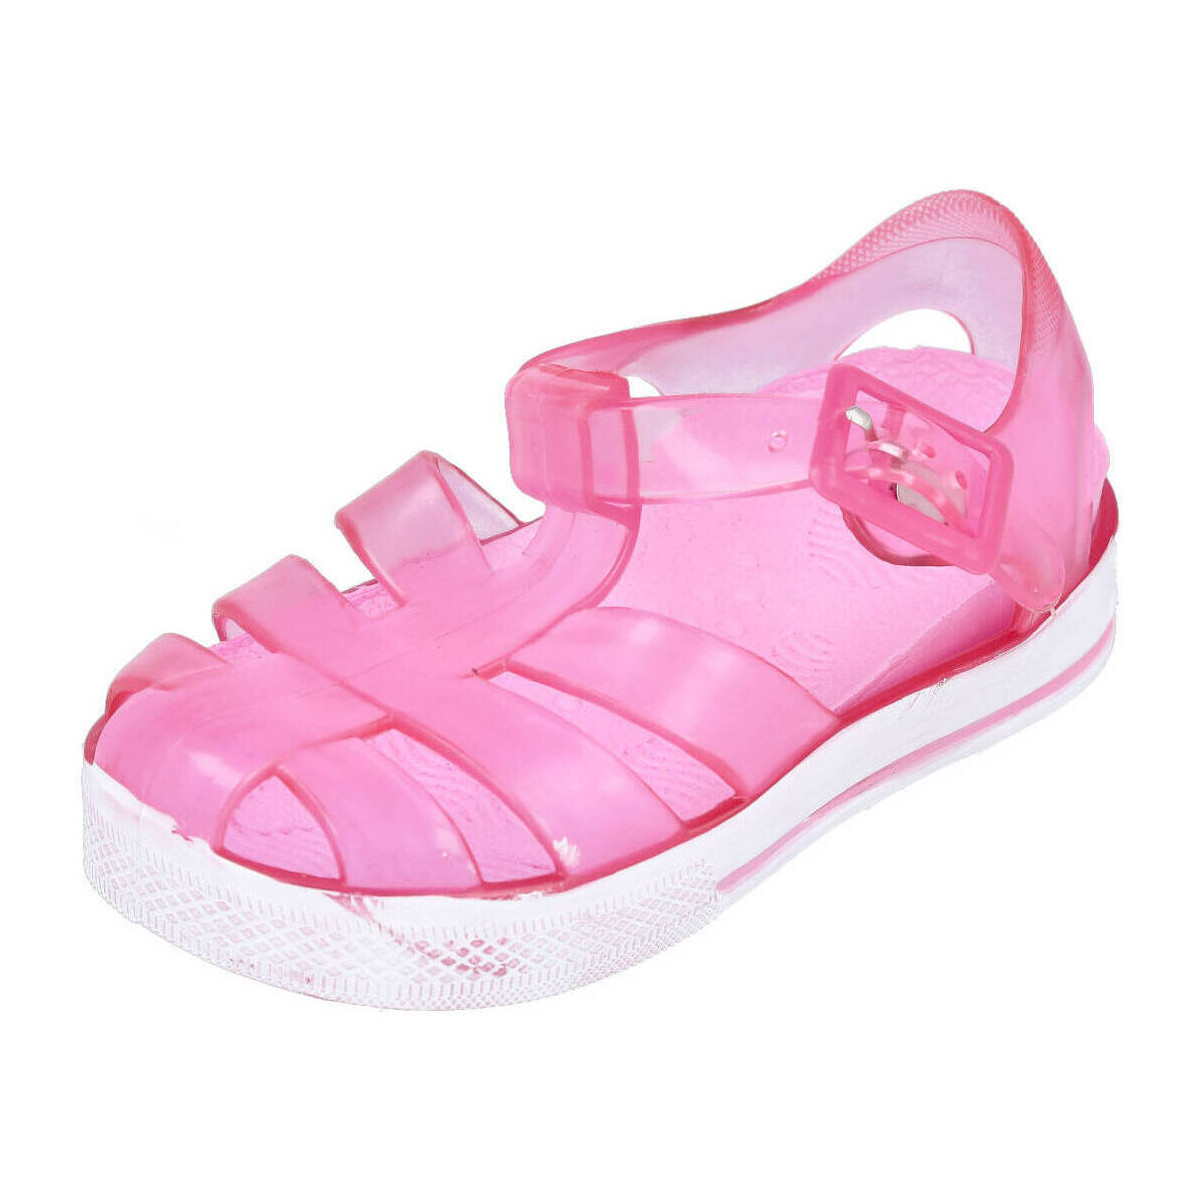 Zapatos Niña Zapatos para el agua L&R Shoes 0158 Rosa